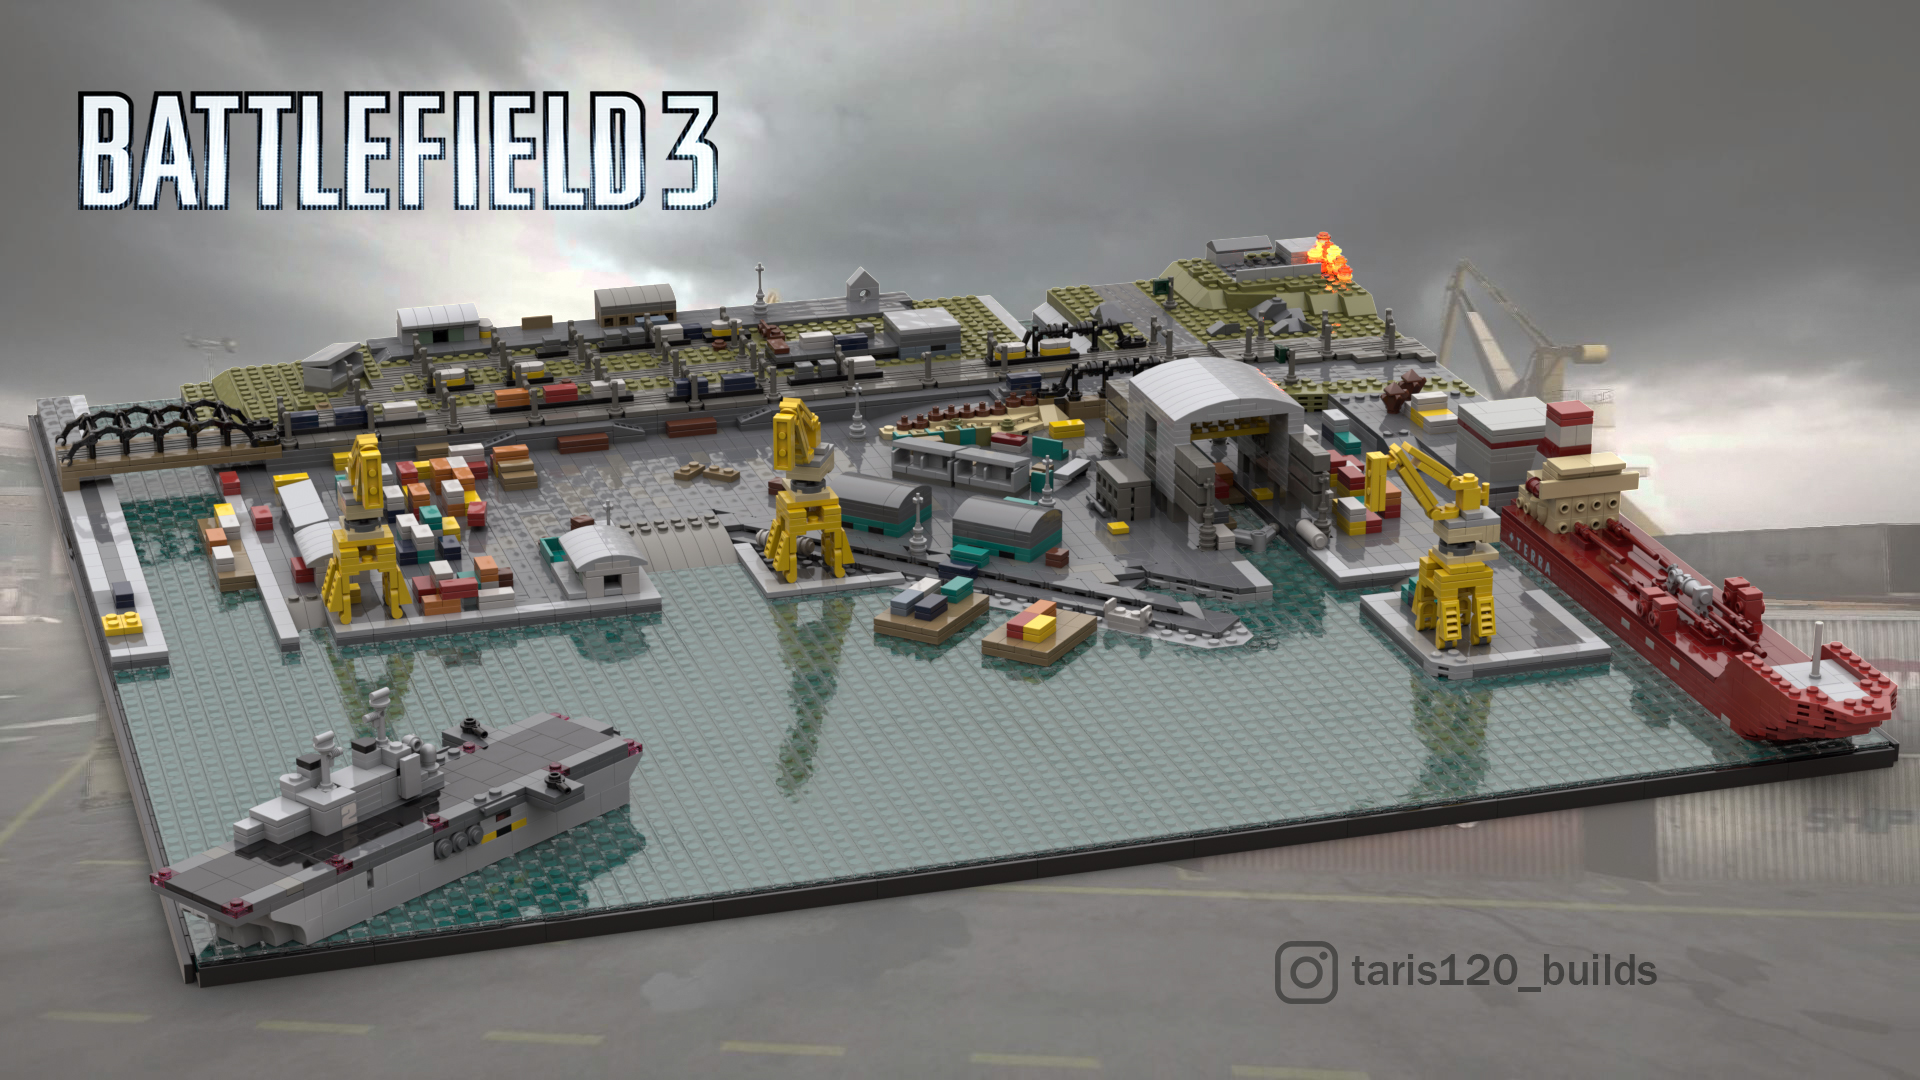 Taris120_Builds creating Battlefield maps... in Lego Bricks | Patreon